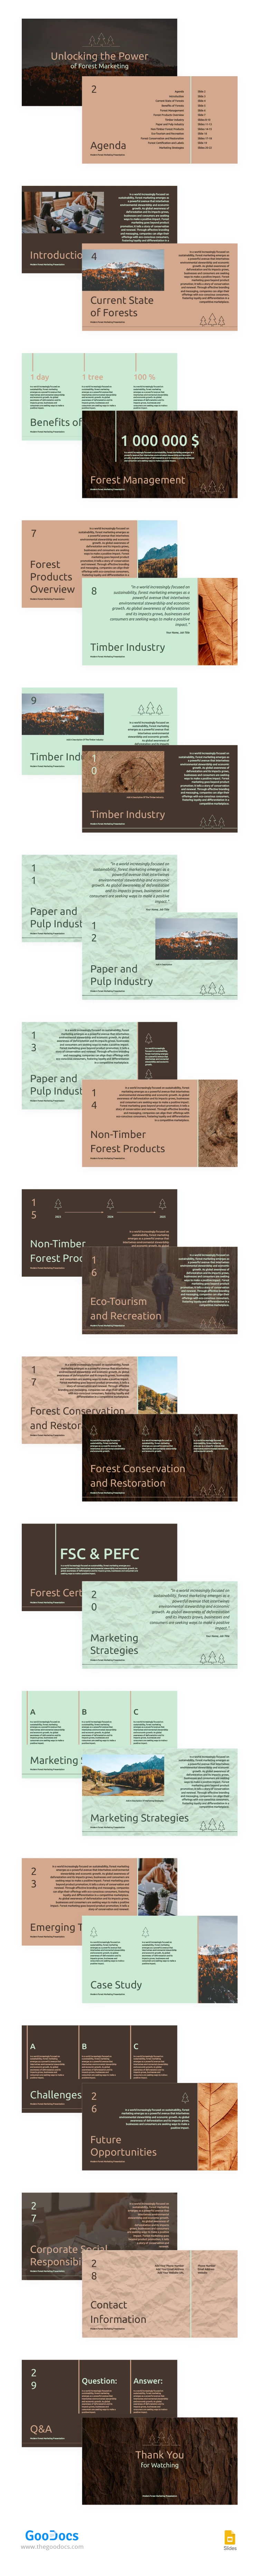 Modern Forest Marketing - free Google Docs Template - 10067032